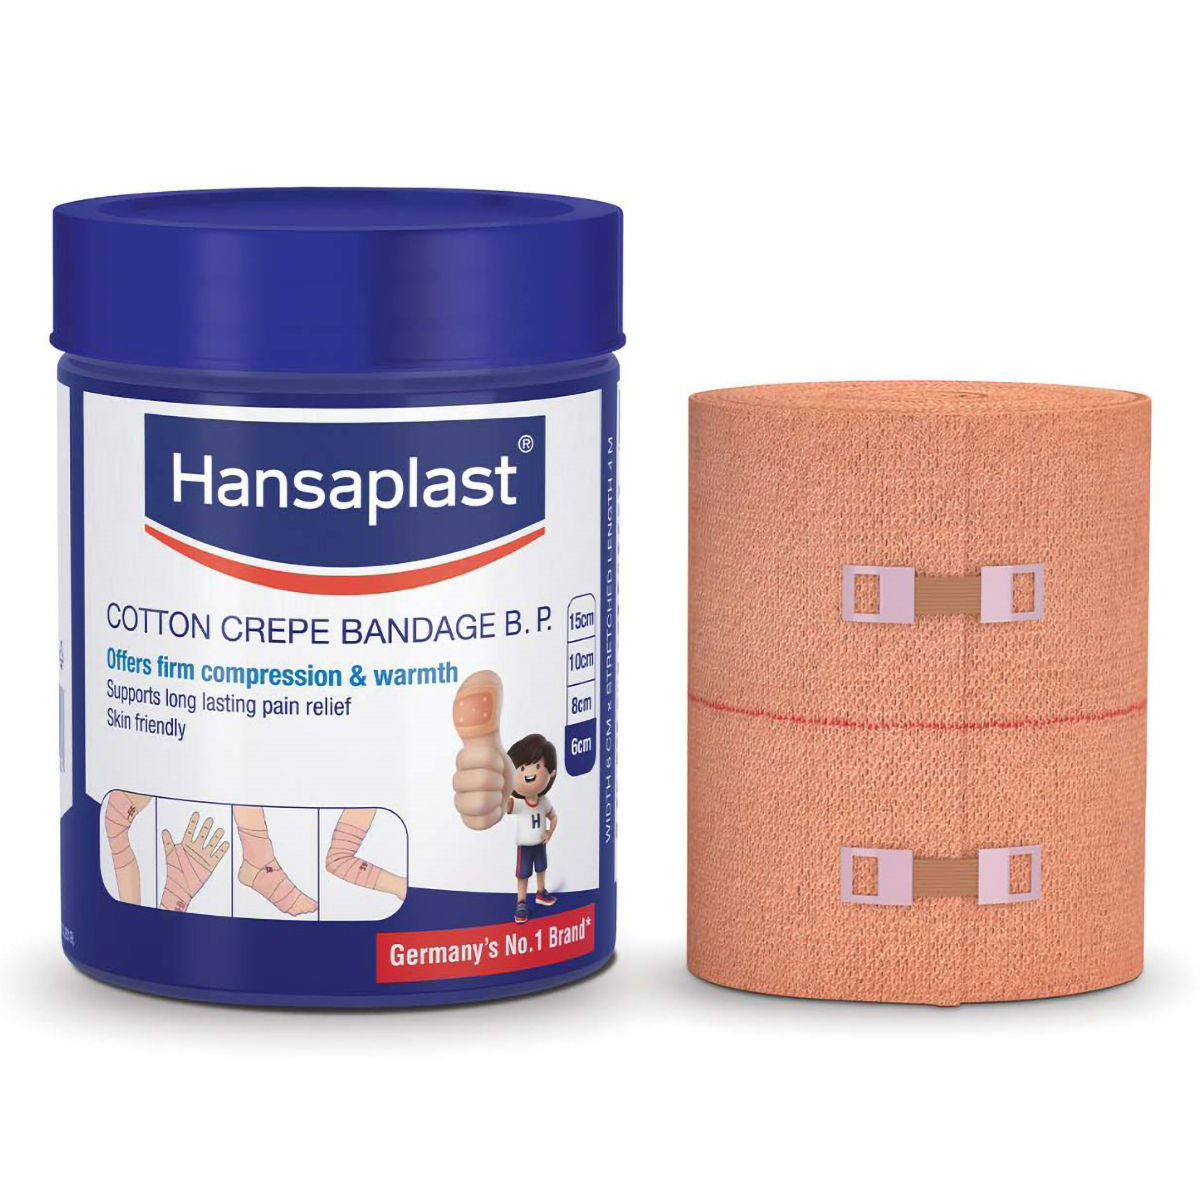 Hansaplast Cotton Crepe Bandage B.P. 6 cm x 4 m, 1 Count, Pack of 1 